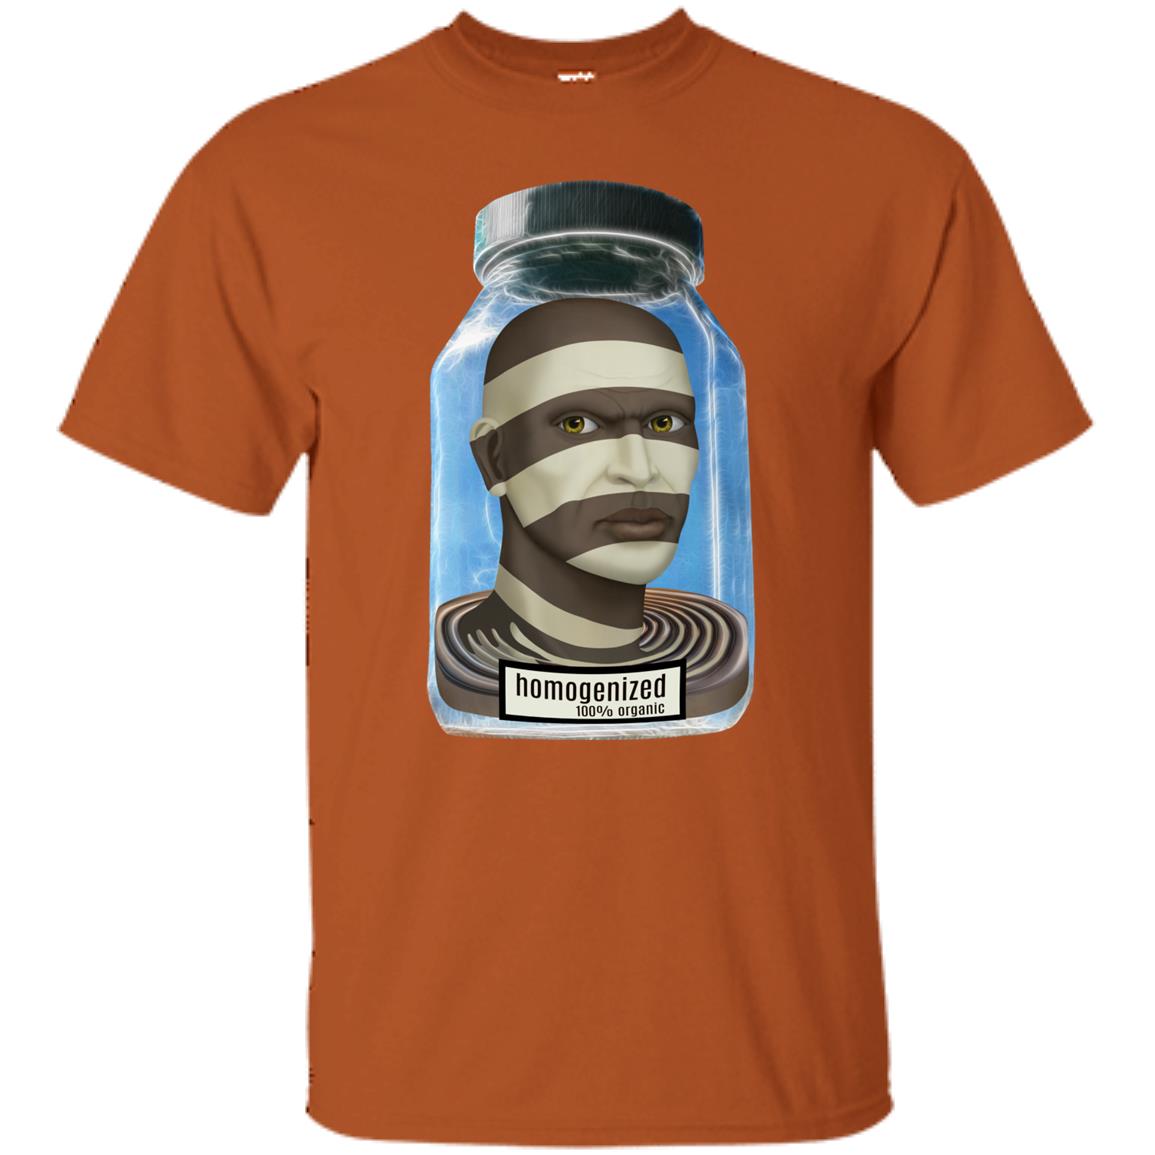 homogenized - Men's Classic Fit T-Shirt